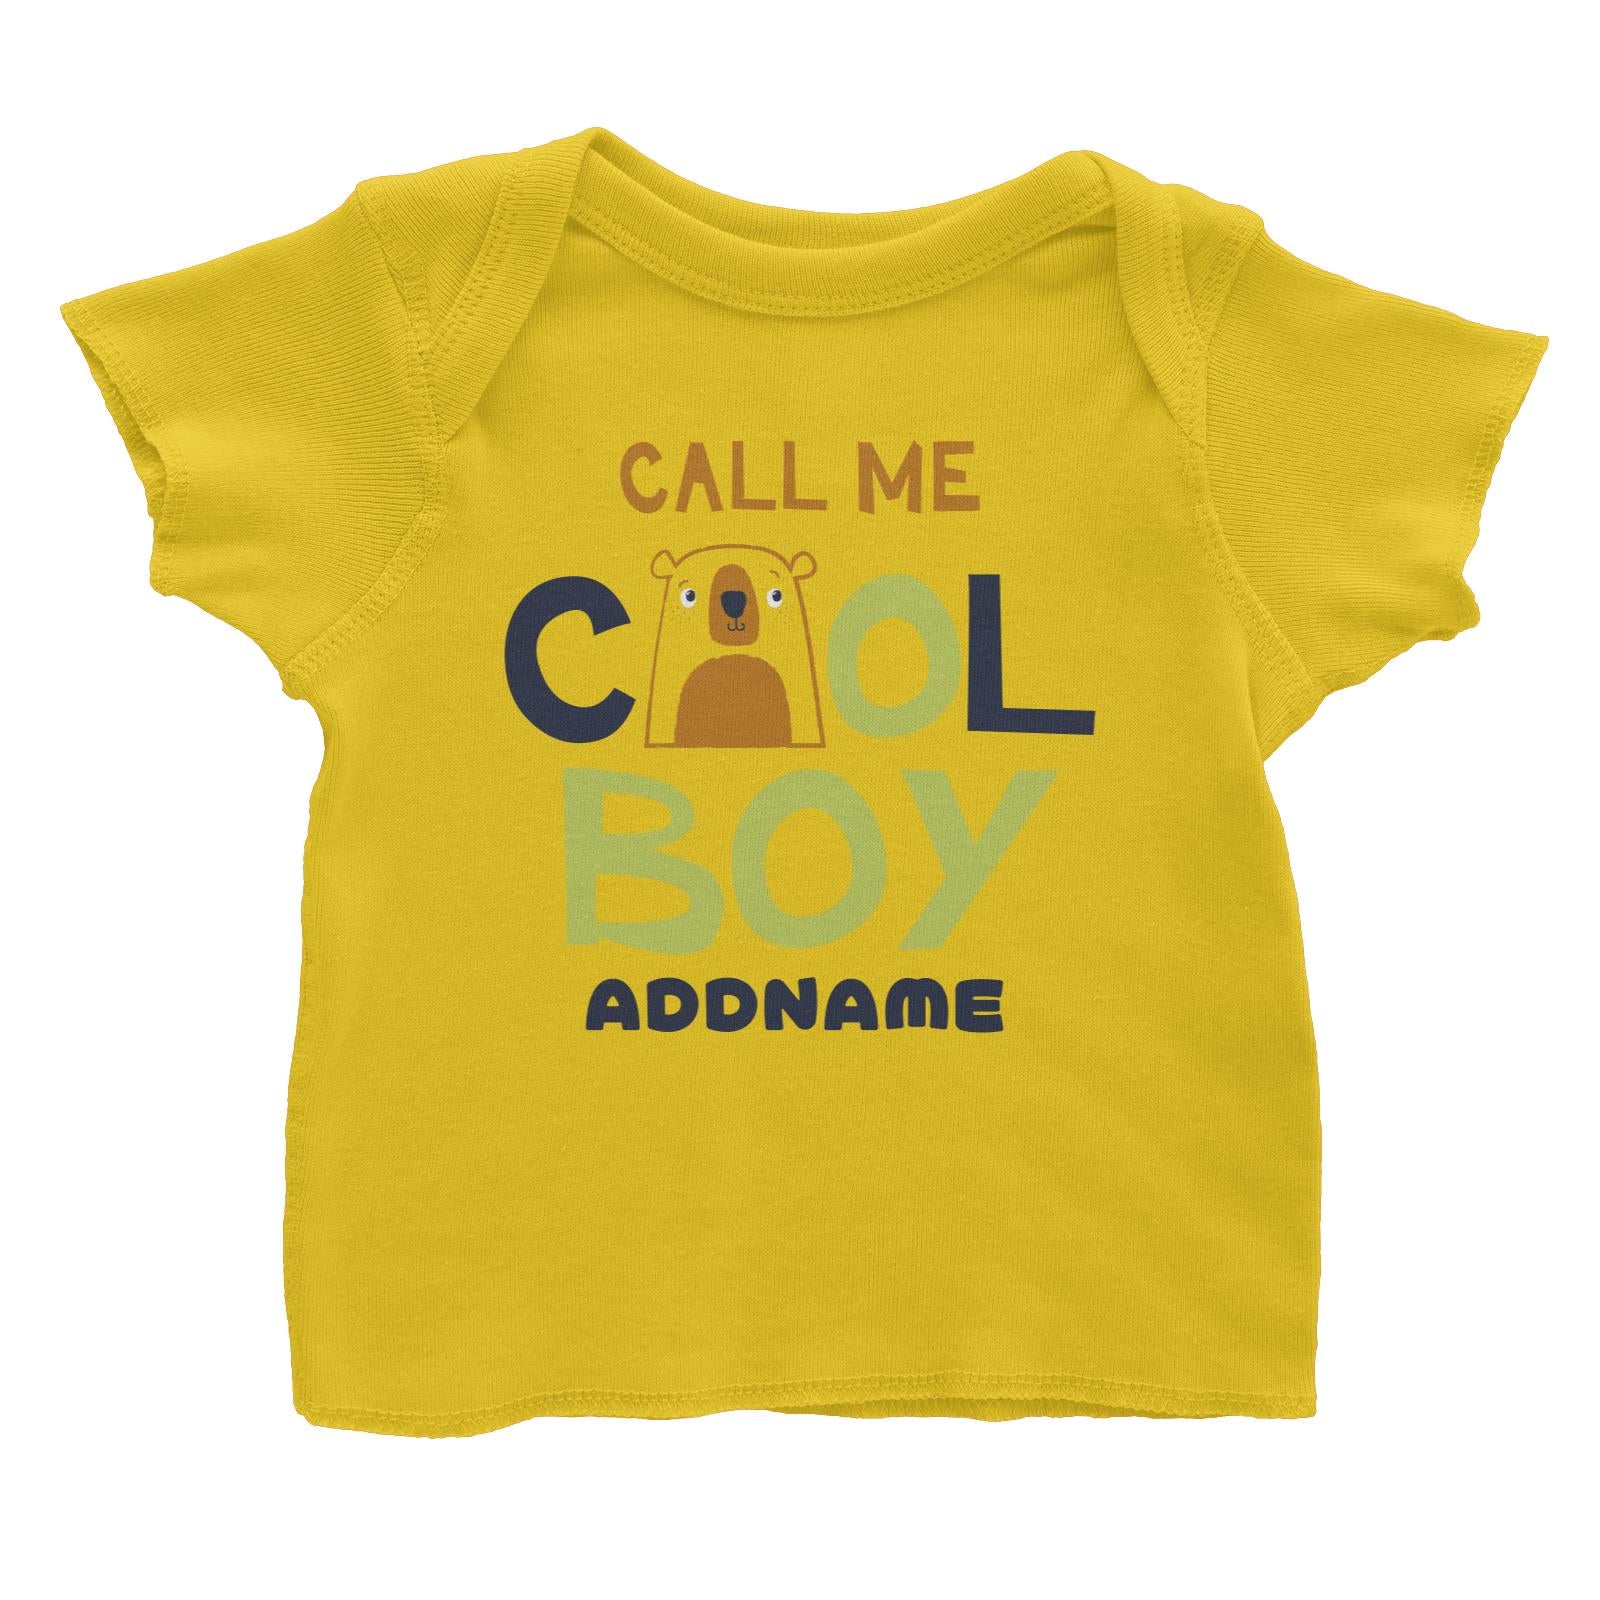 Call Me Cool Boy Bear Addname Baby T-Shirt